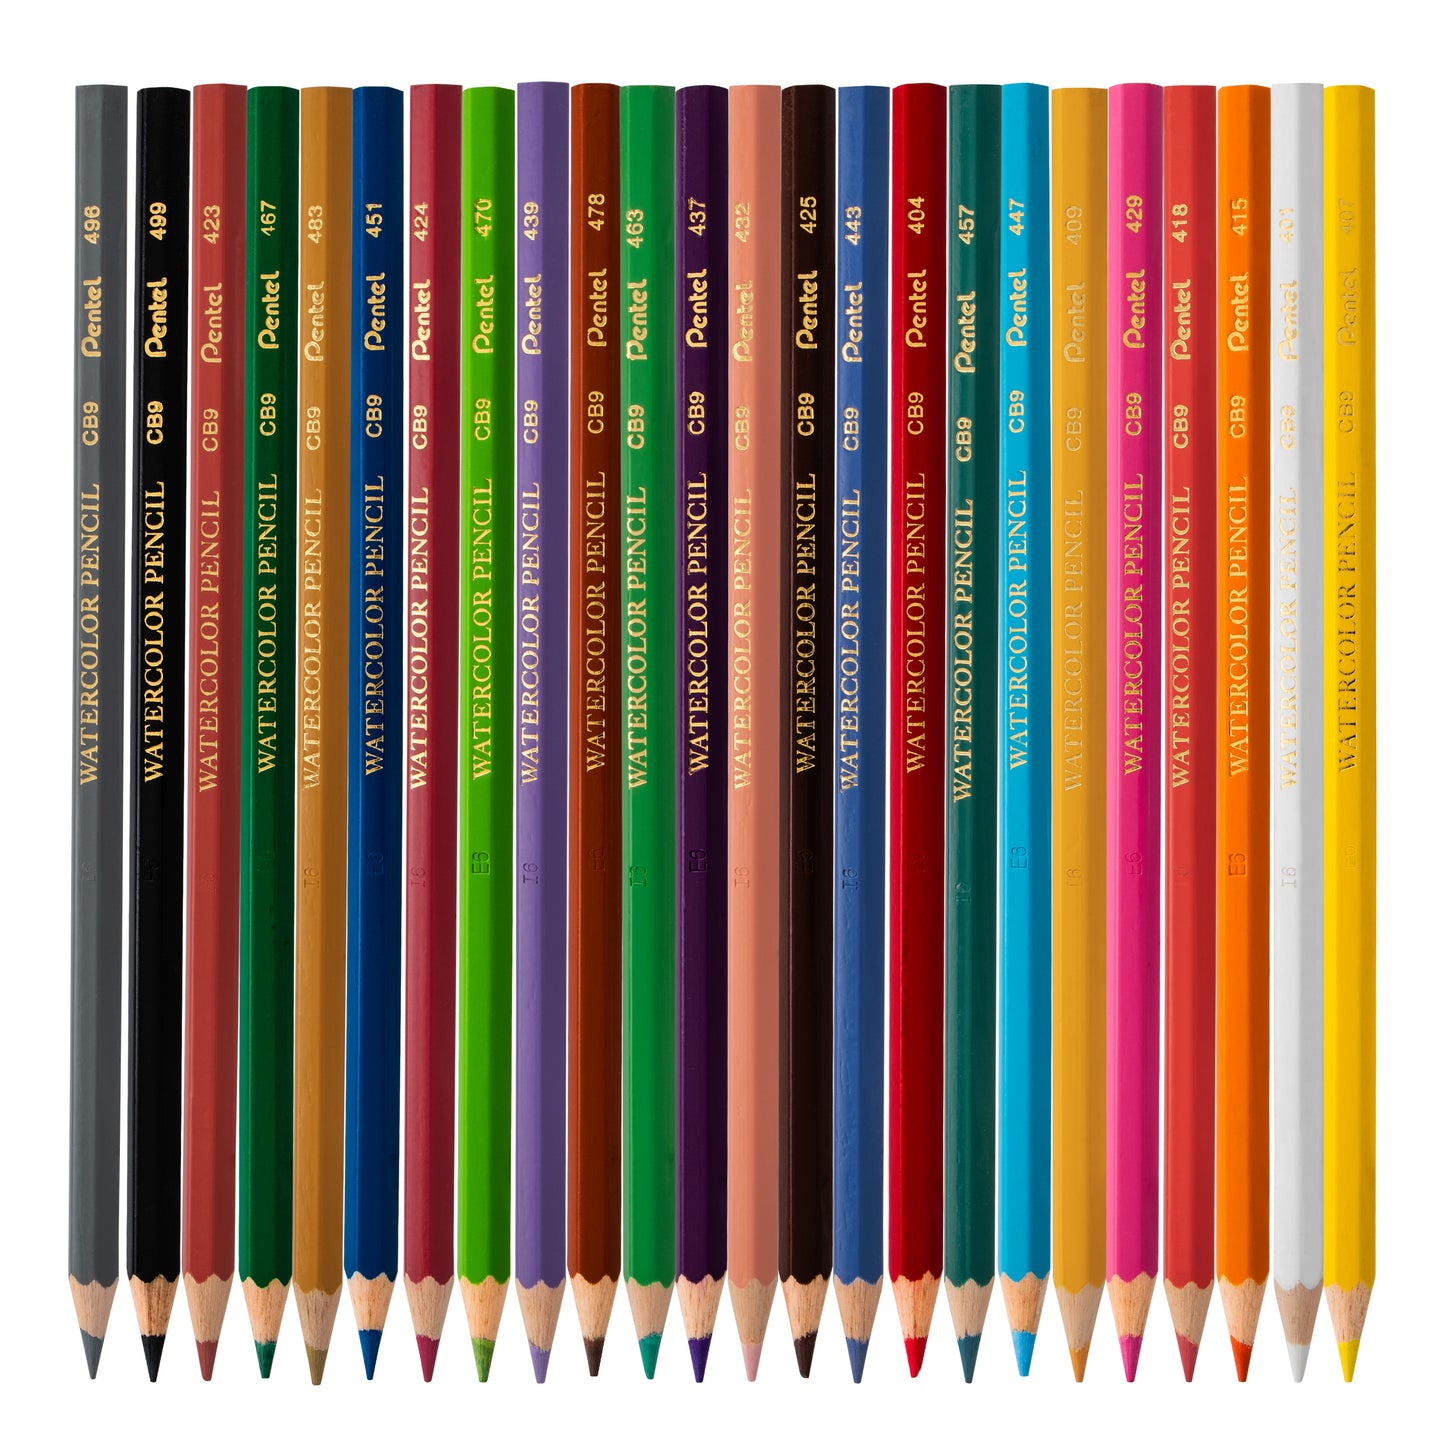 Pentel Arts Watercolor Pencil Set - Assorted Colors, 24-Pack